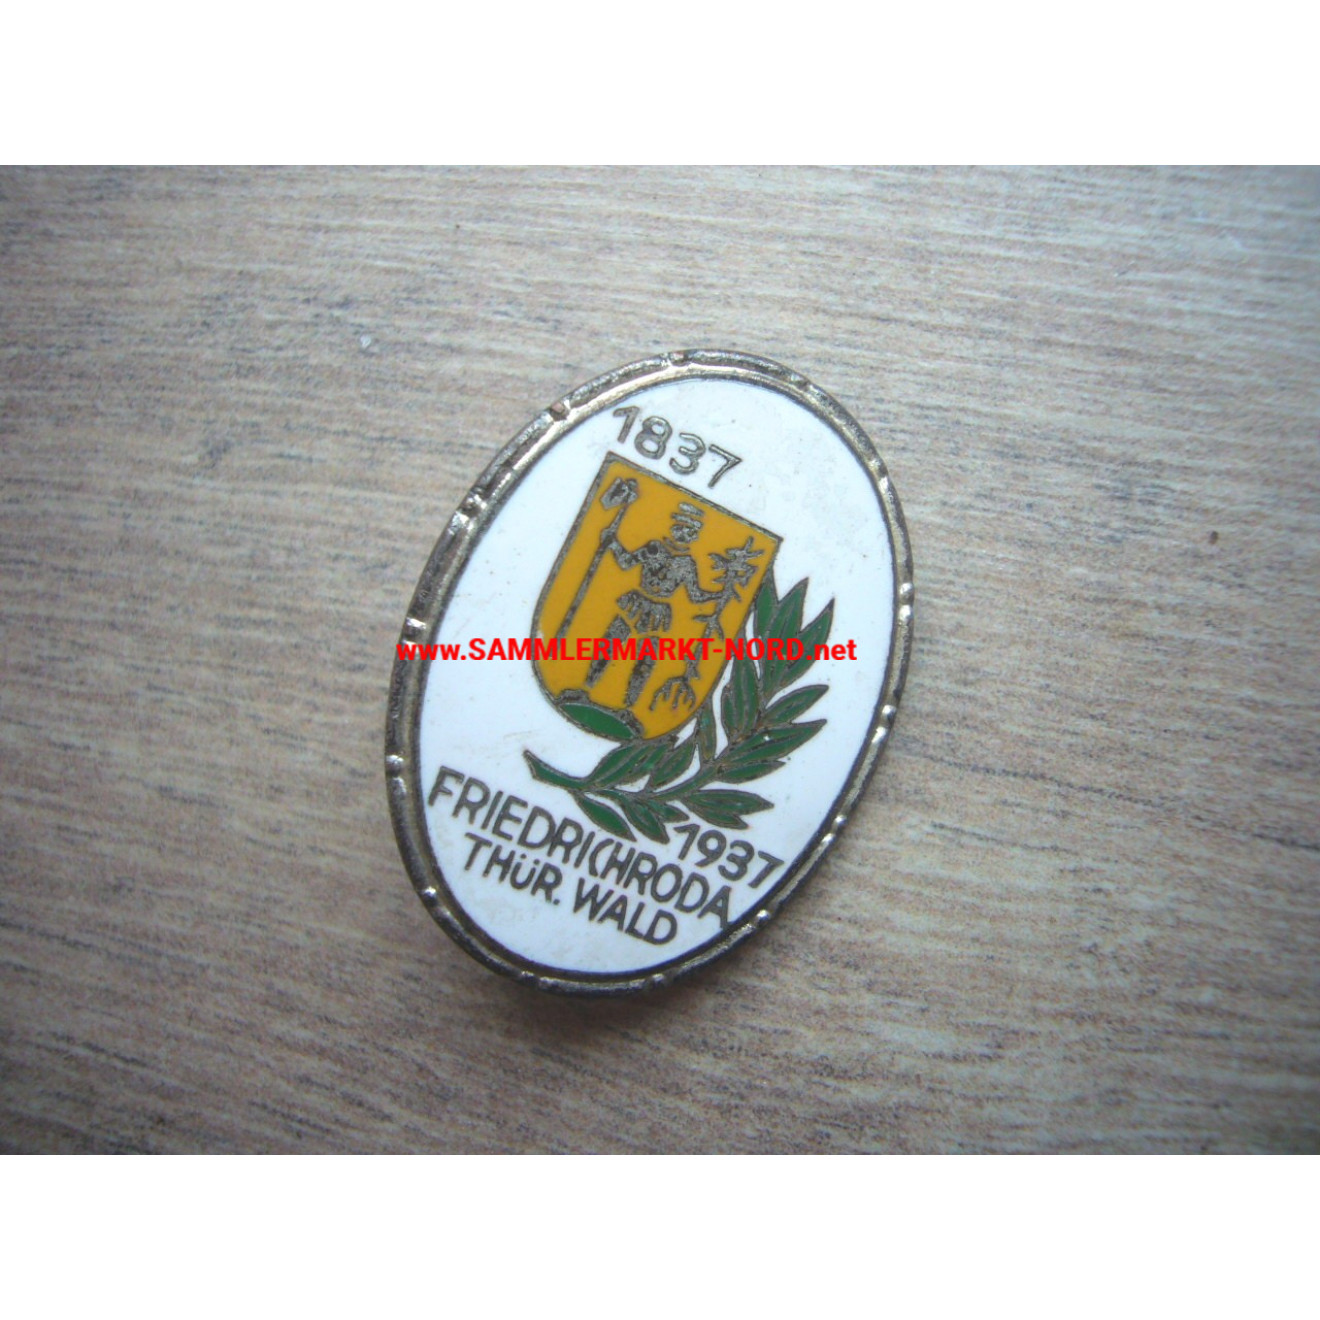 Friedrichroda, Thuringian Forest 1837 - 1937 - Anniversary badge